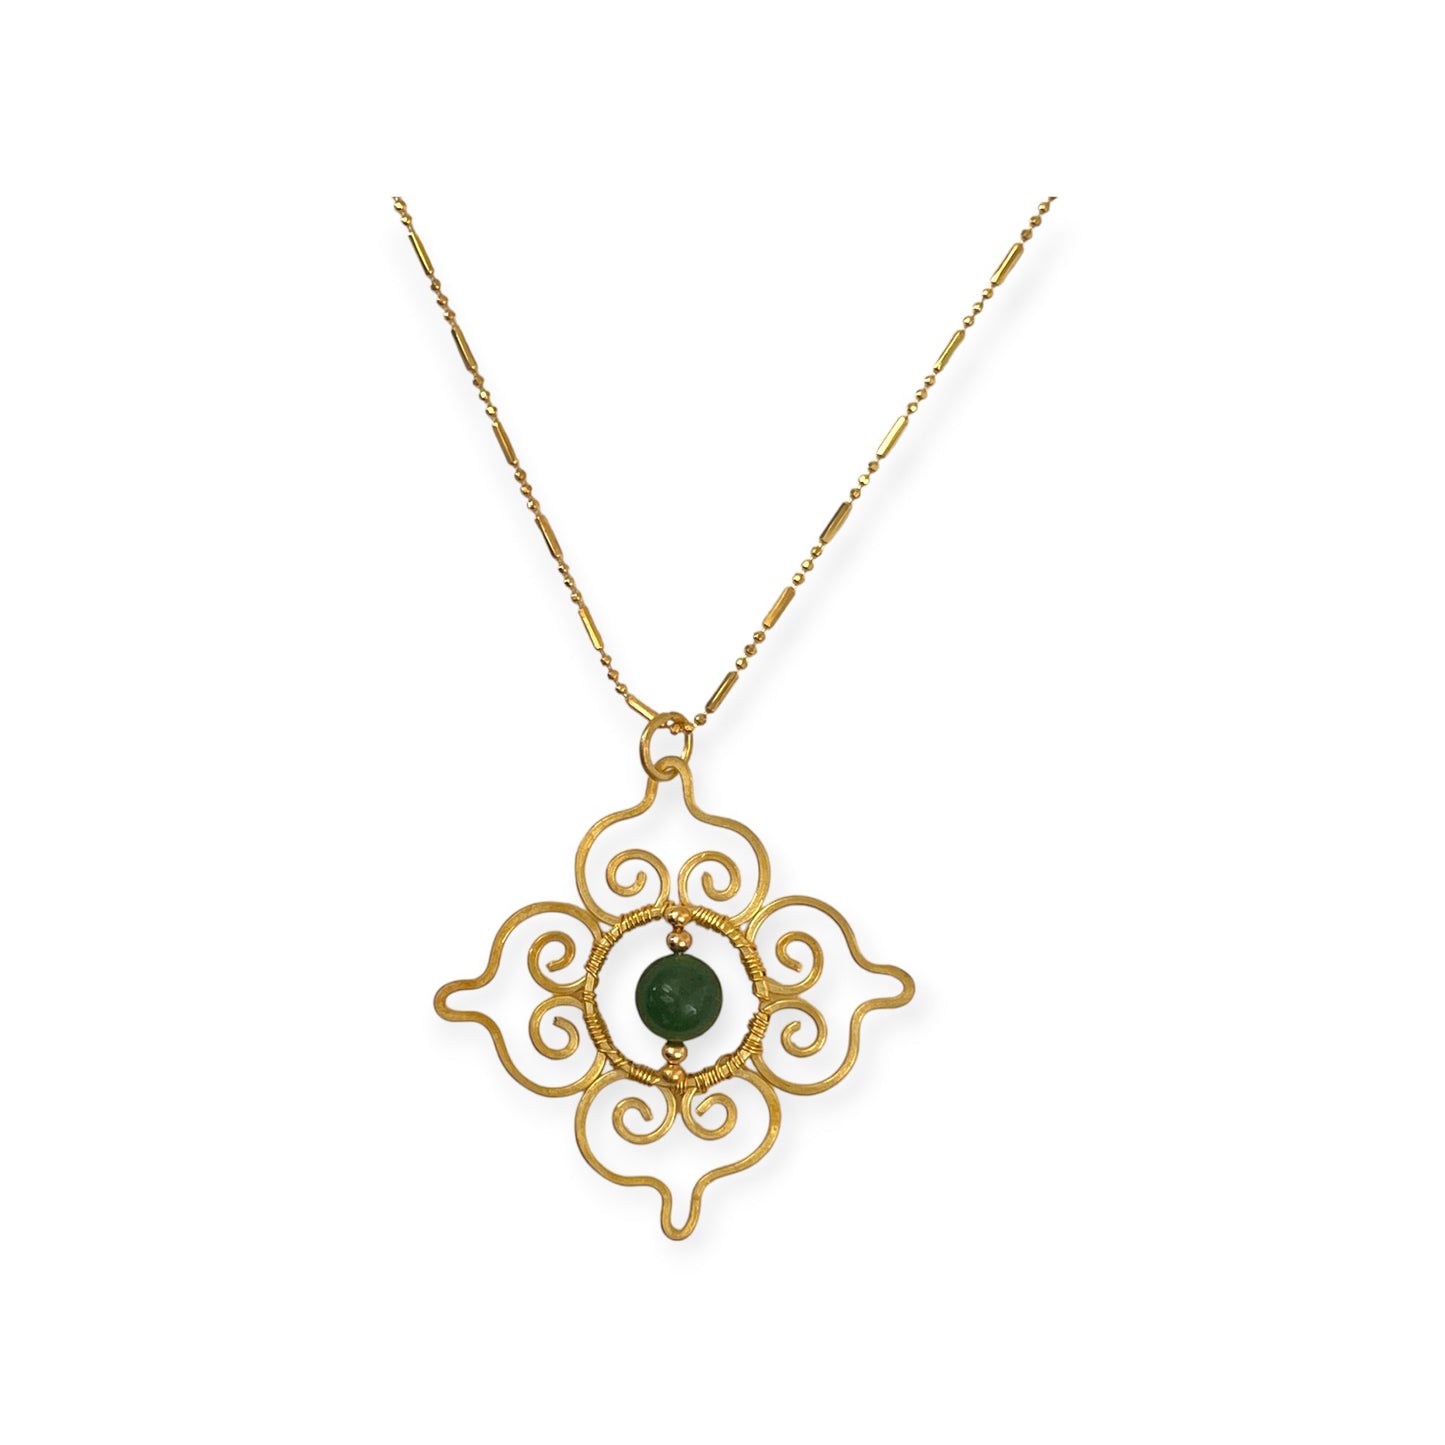 Thai design inspired green chalcedony pendant necklace - Sundara Joon